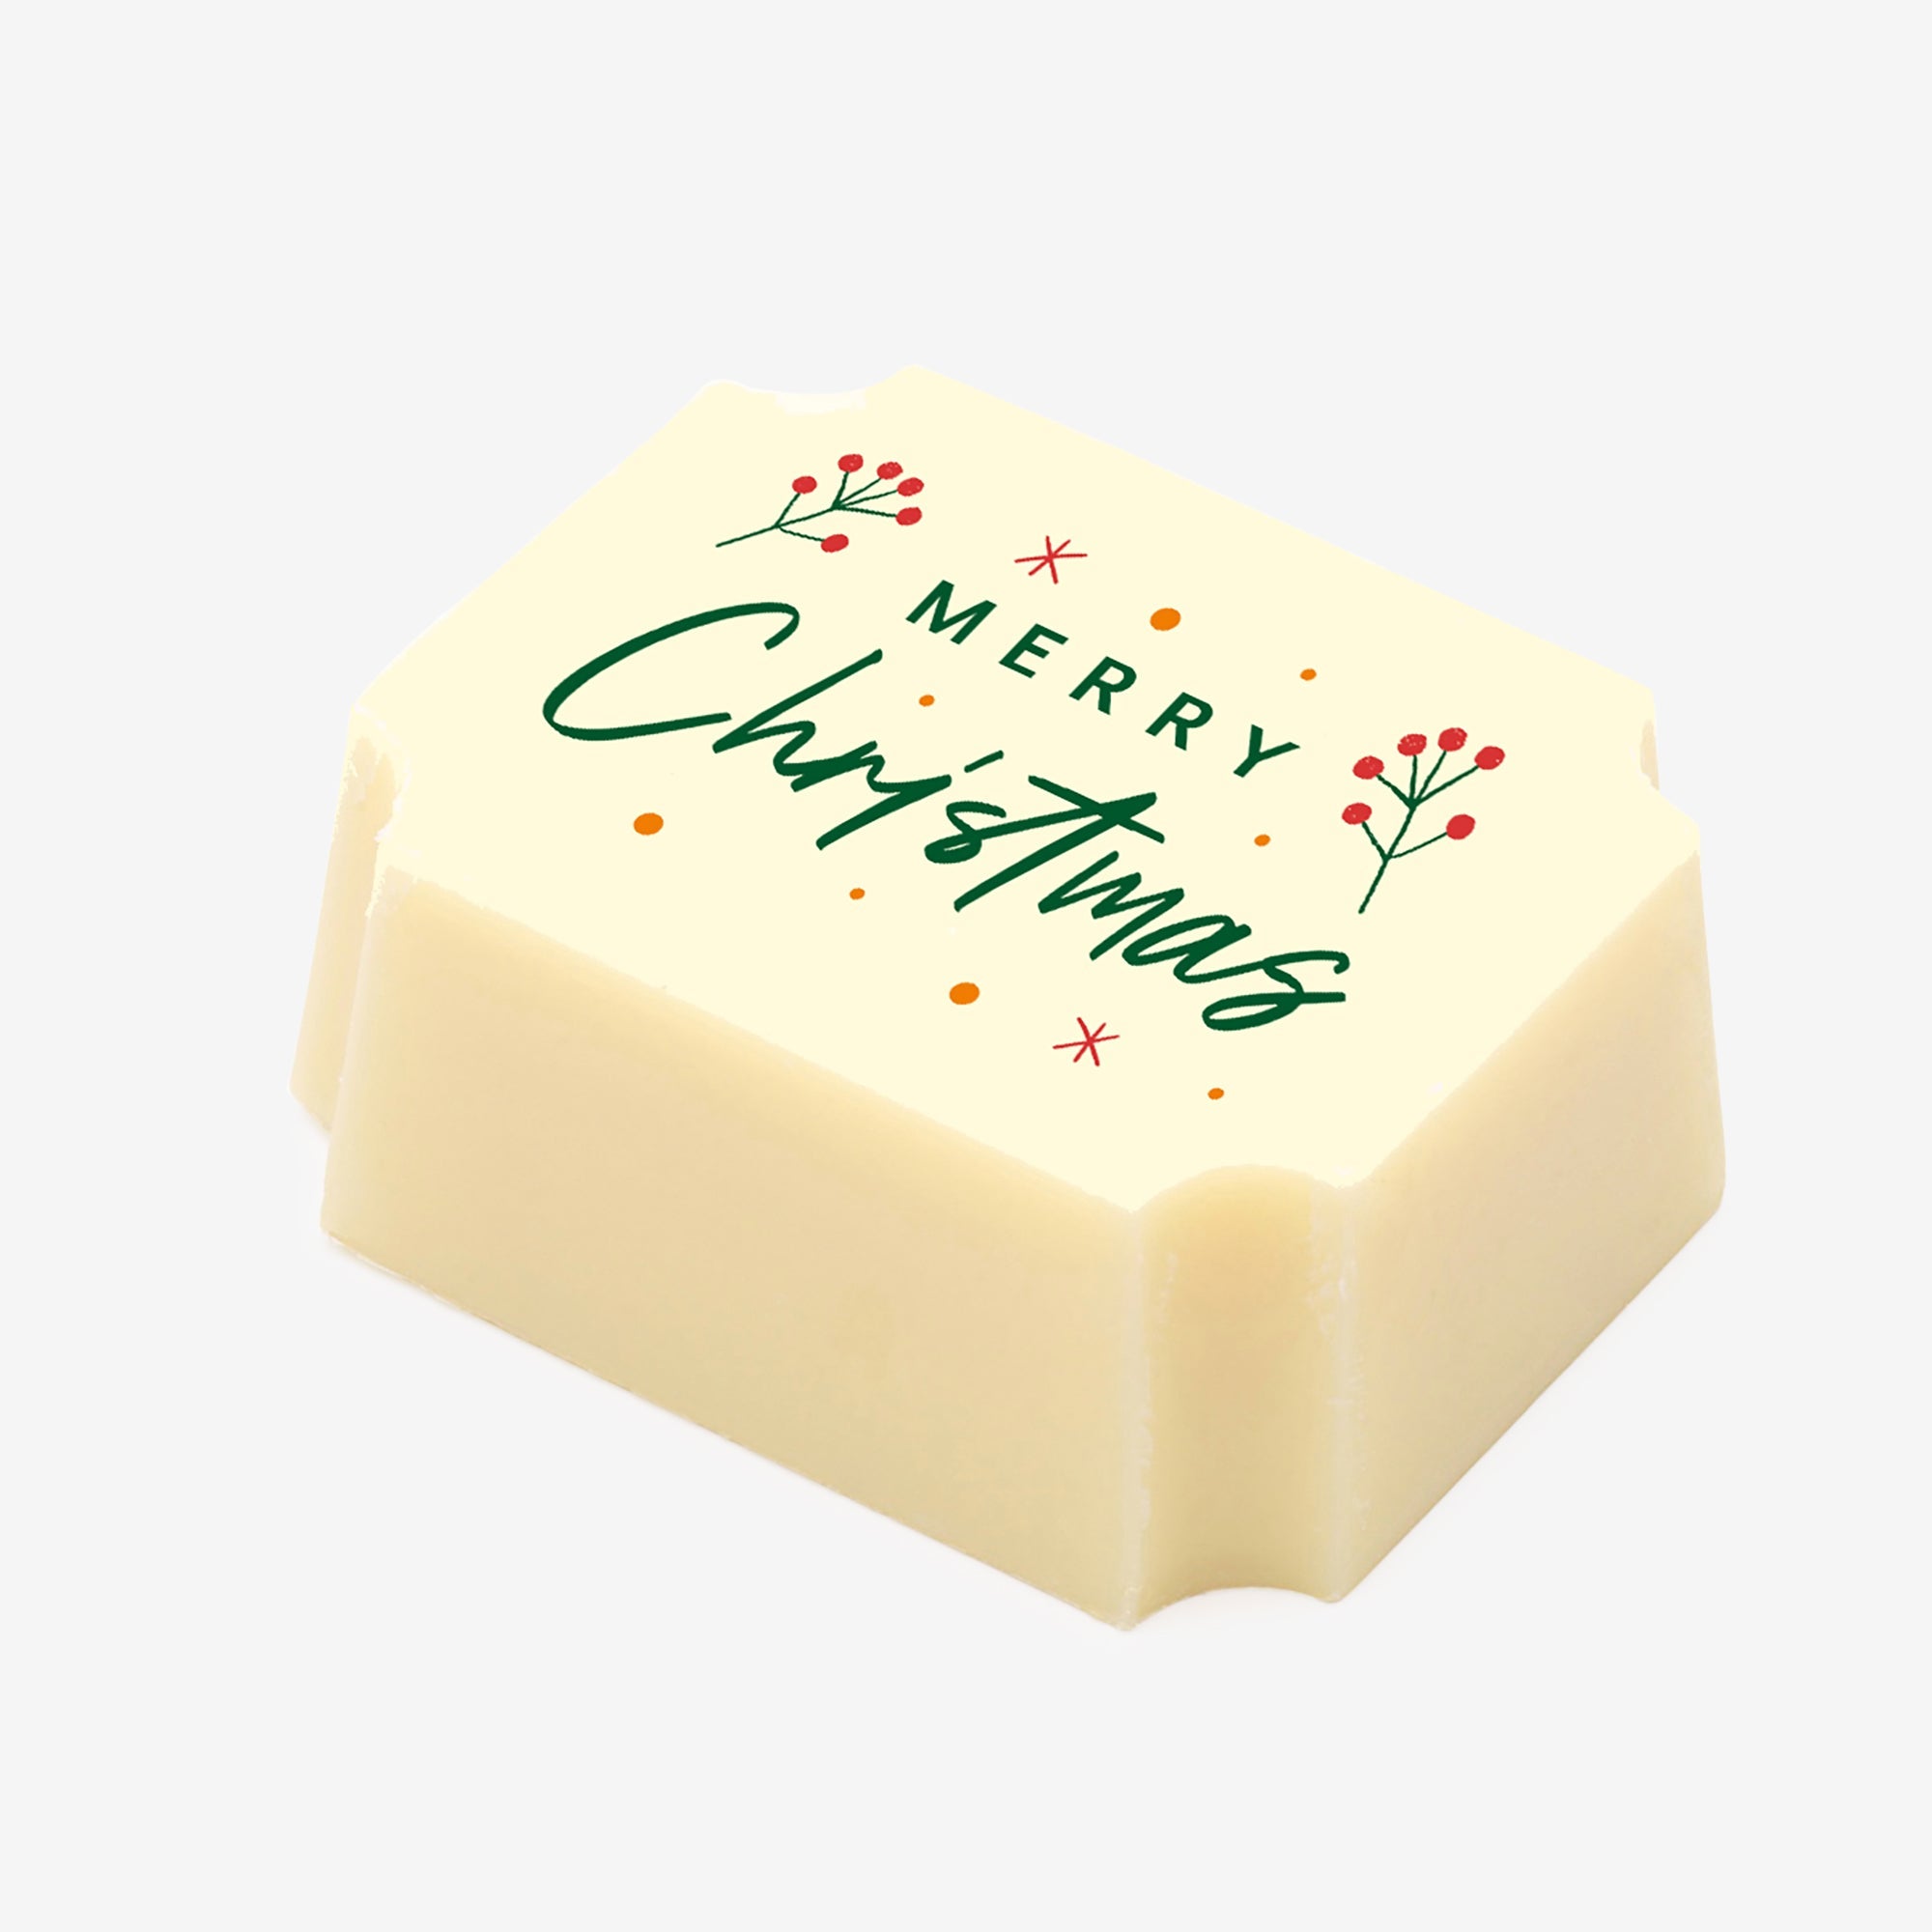 Christmas - A Bit Of Everything Selection Chocolate Box 228g